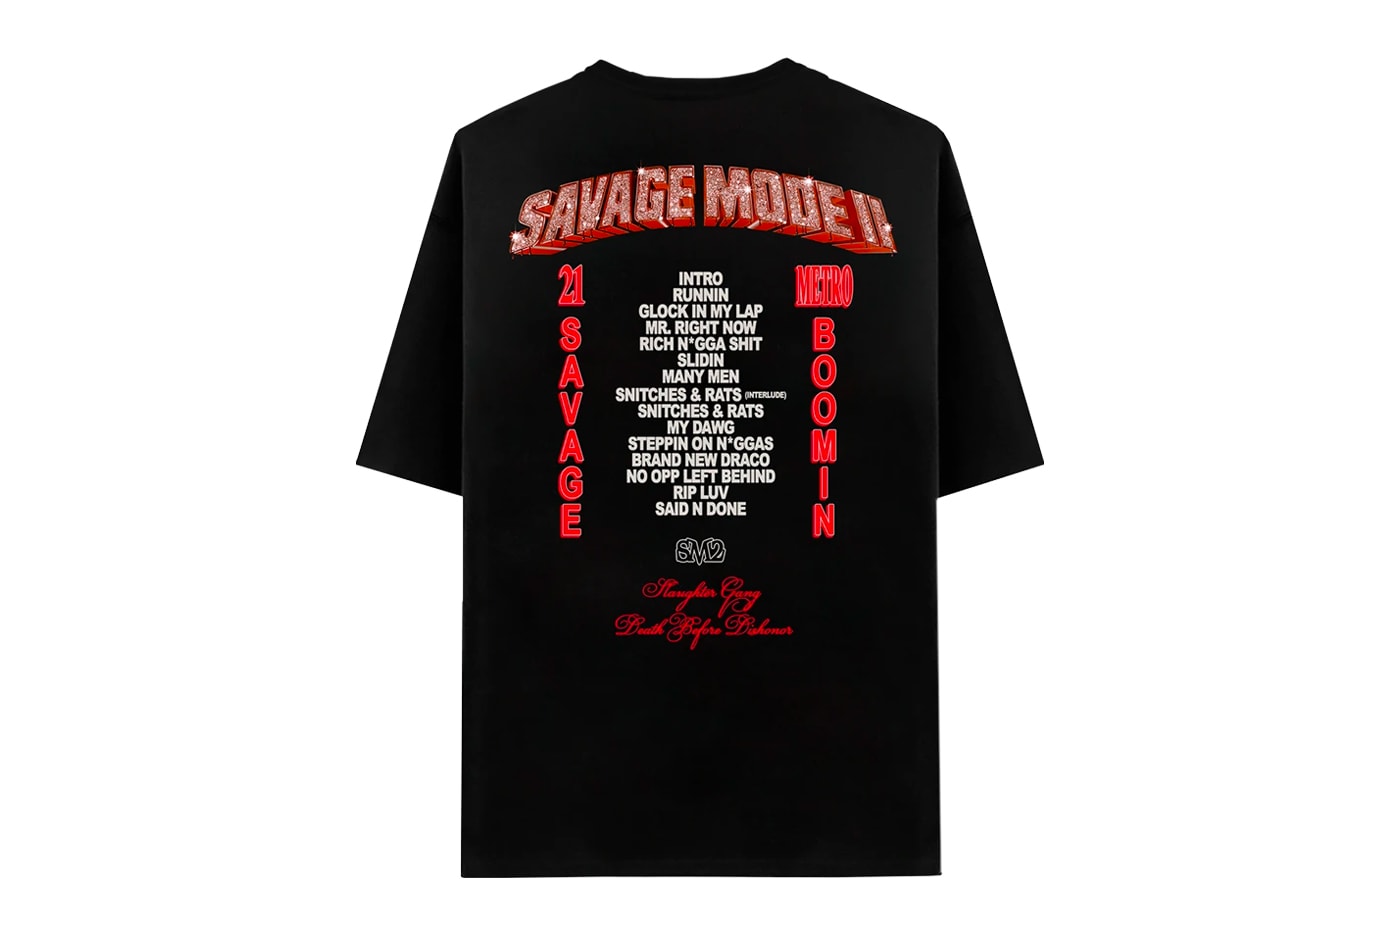 21 Savage Metro Boomin Savage Mode 2 Merchandise t shirts jackets vinyl coffee book keychain morgan freeman